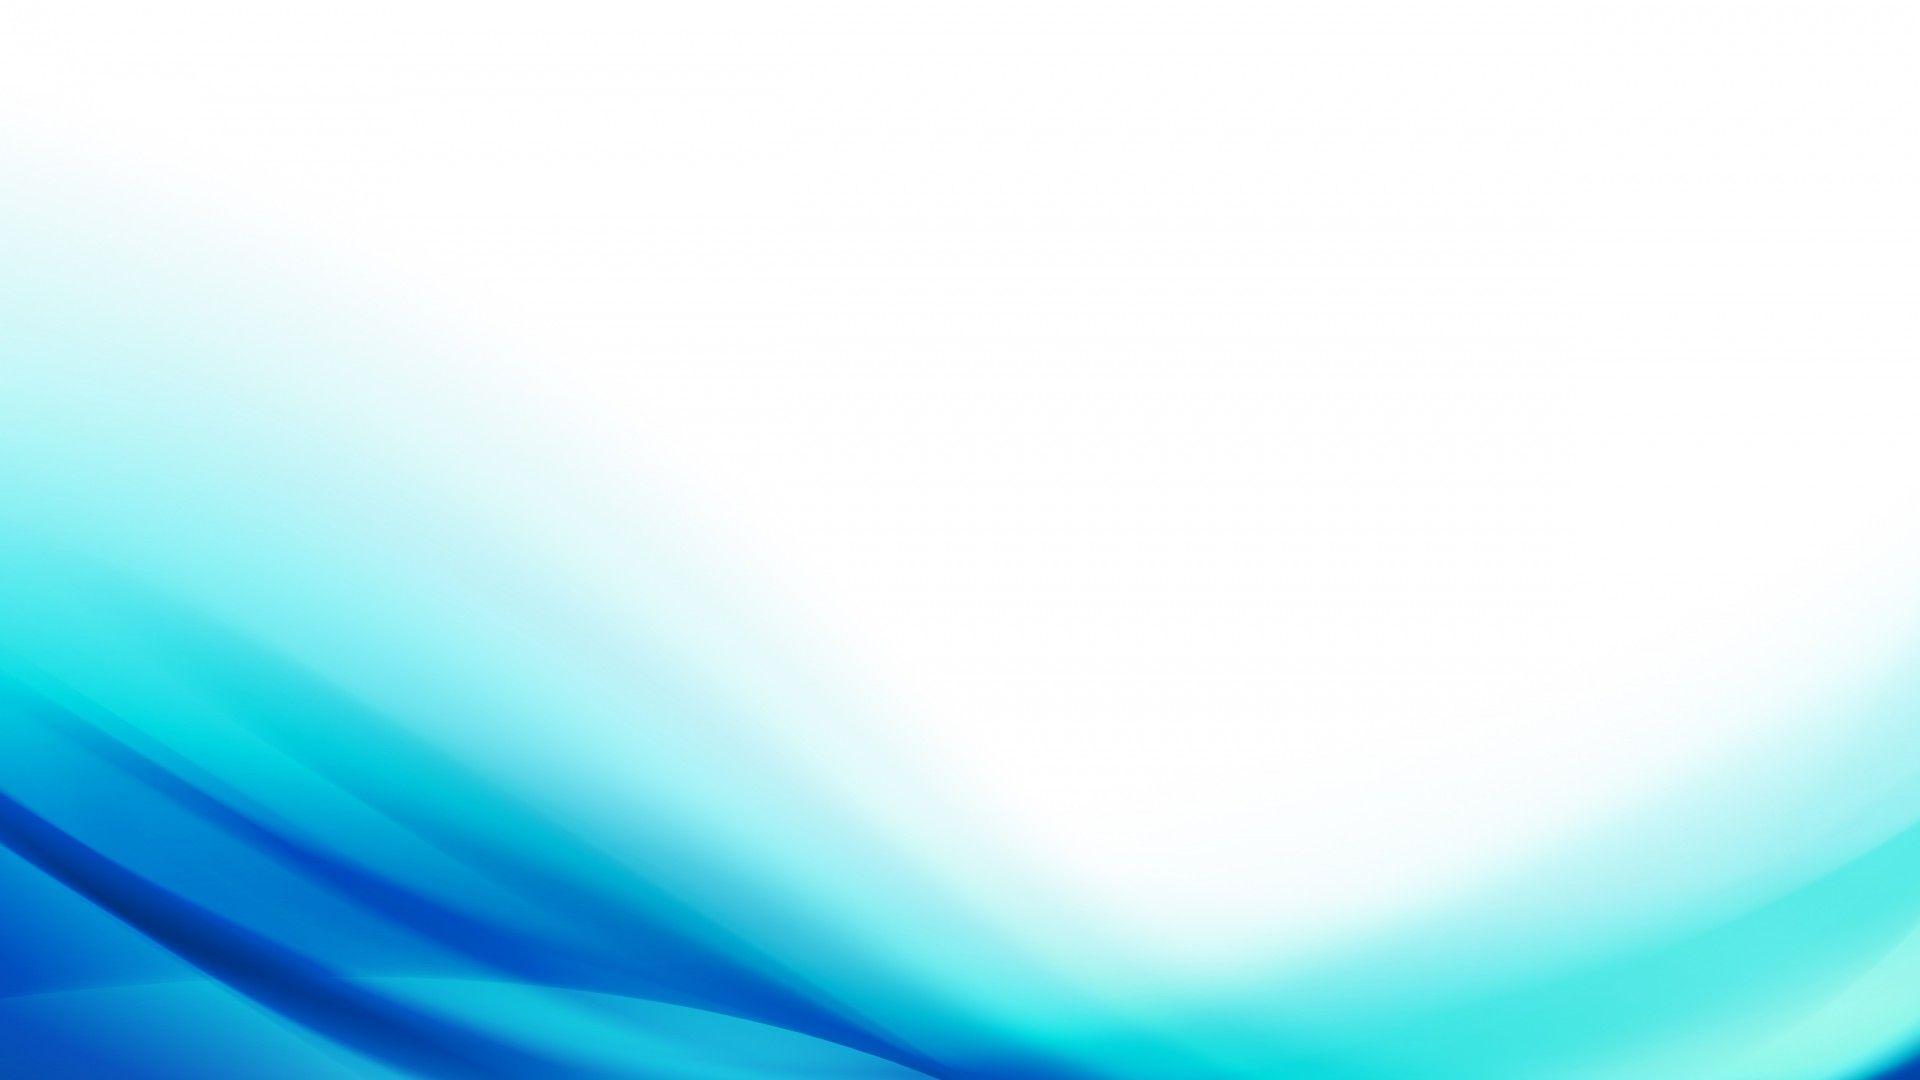 HD wallpaper ocean wave sea waves blue water turquoise splashes  cyan  Wallpaper Flare